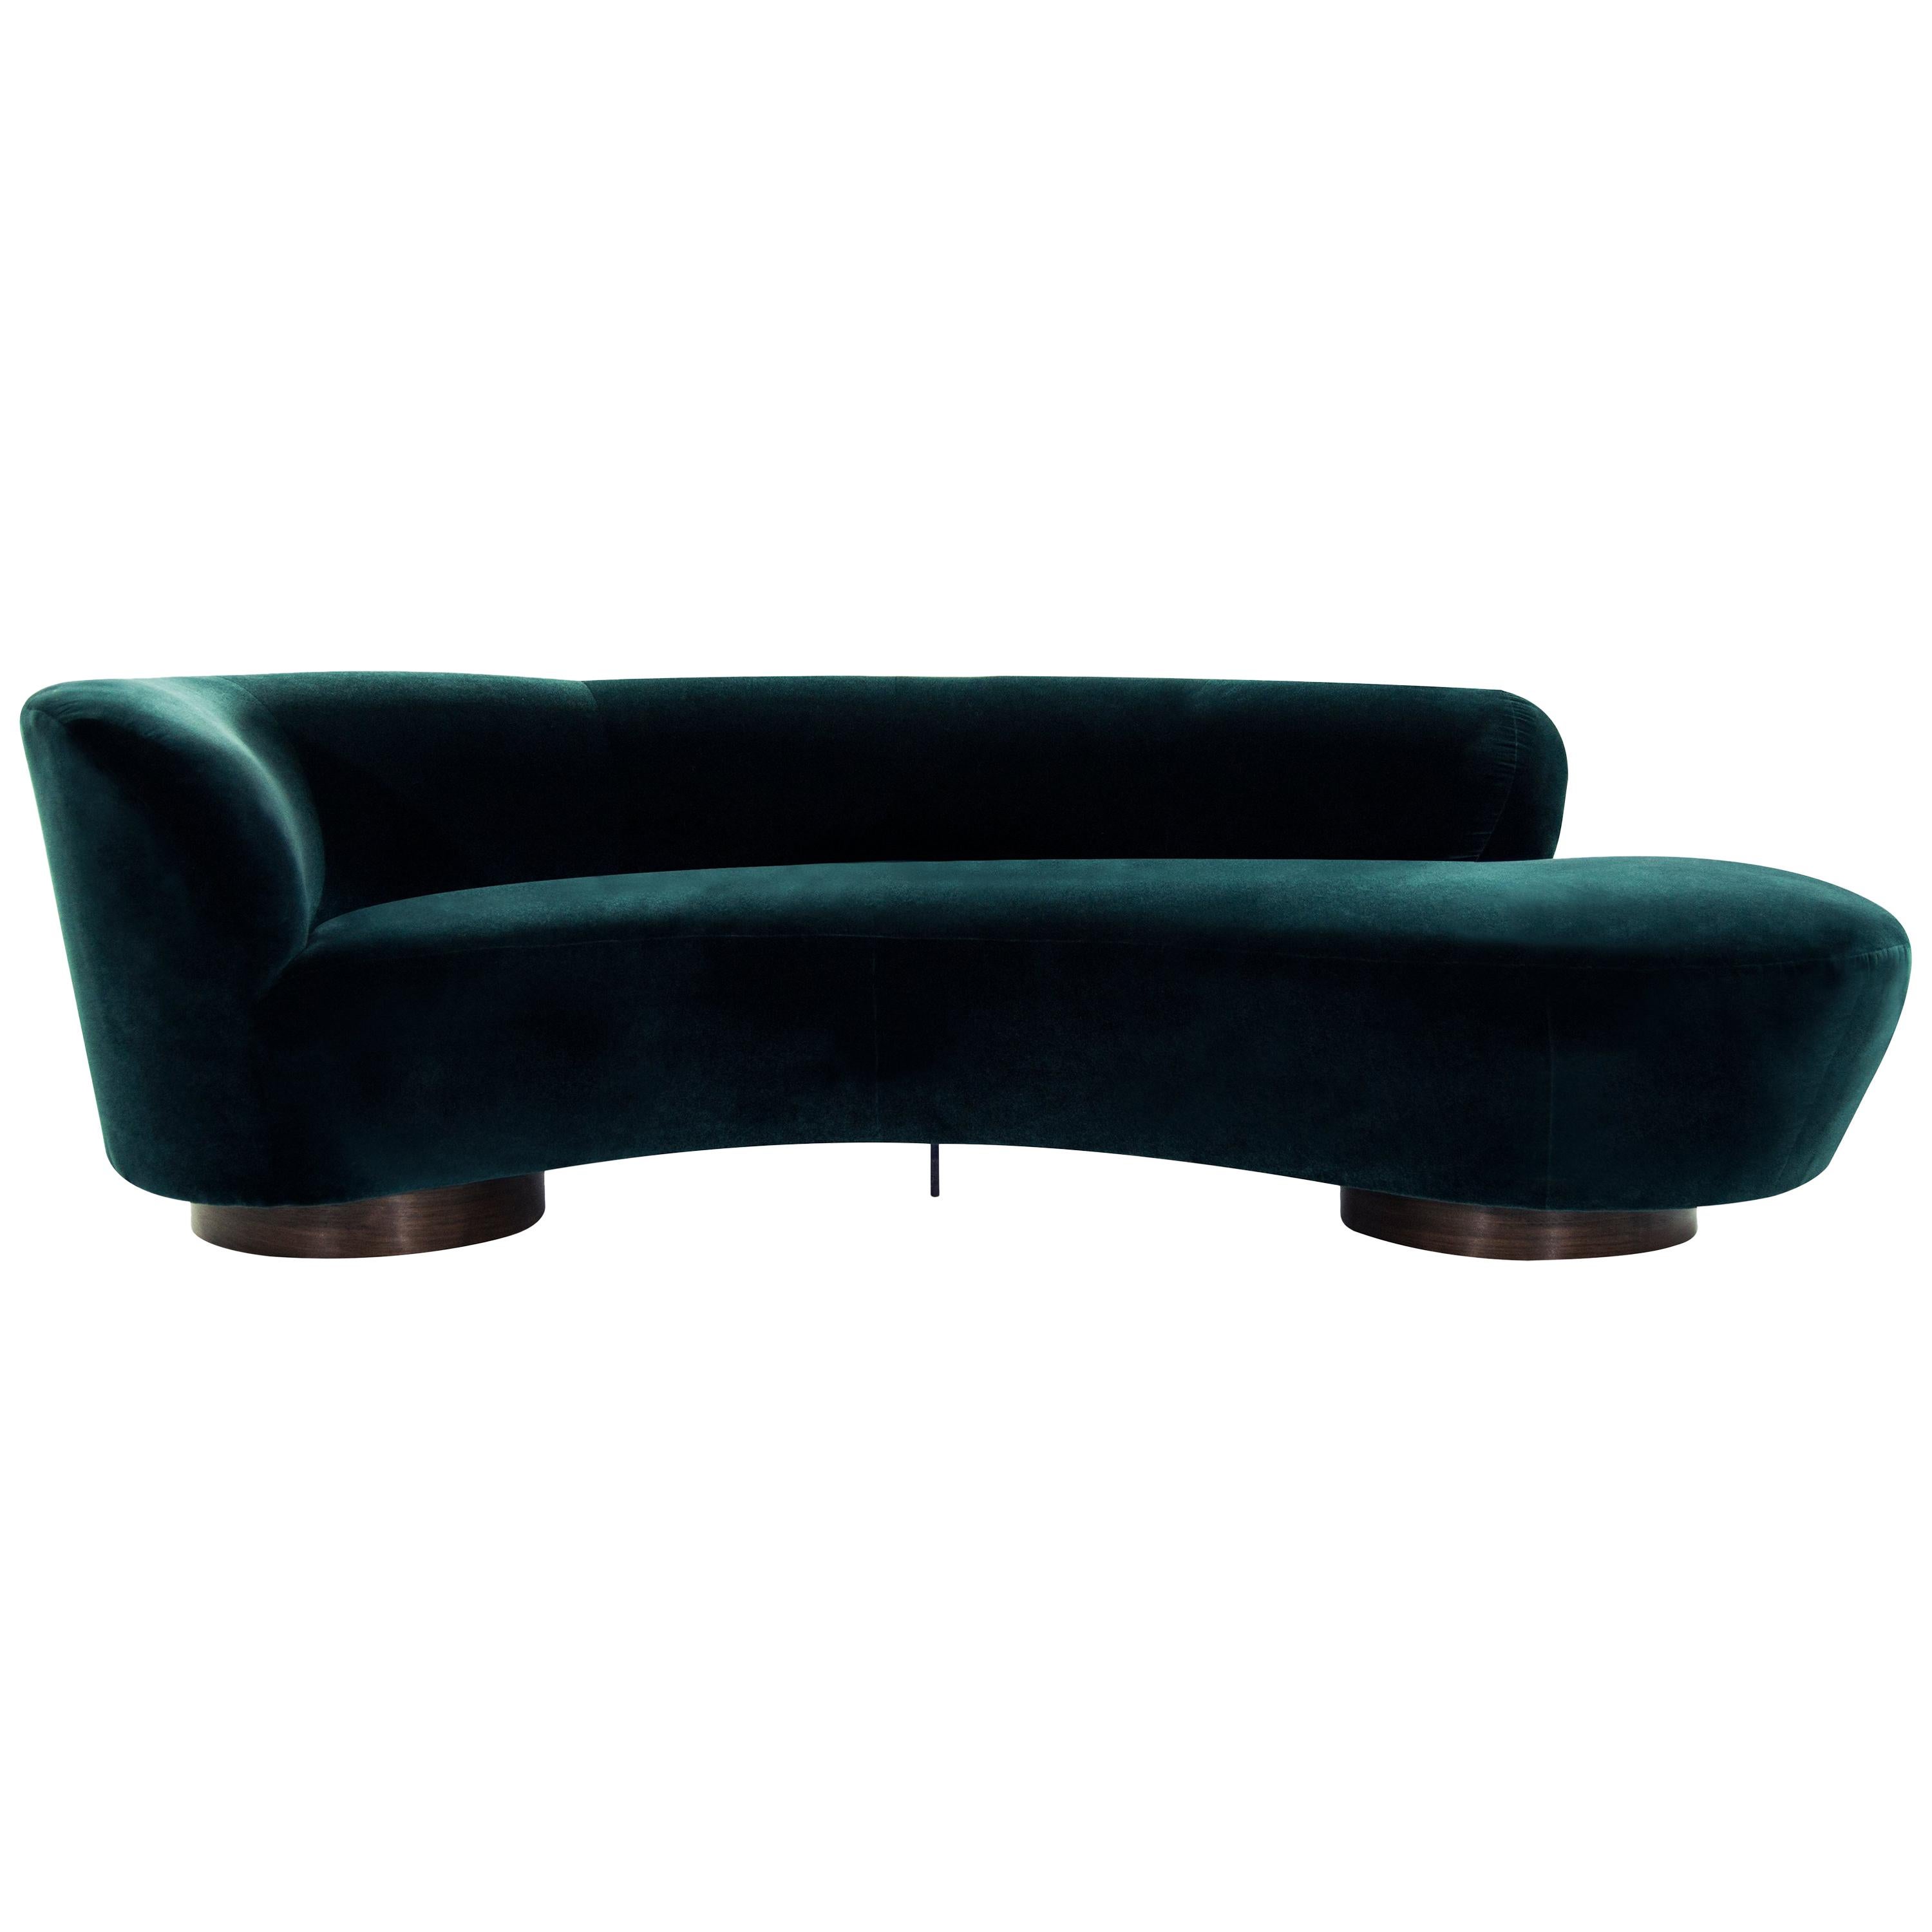 Curved Sofa in Teal Velvet by Vladimir Kagan